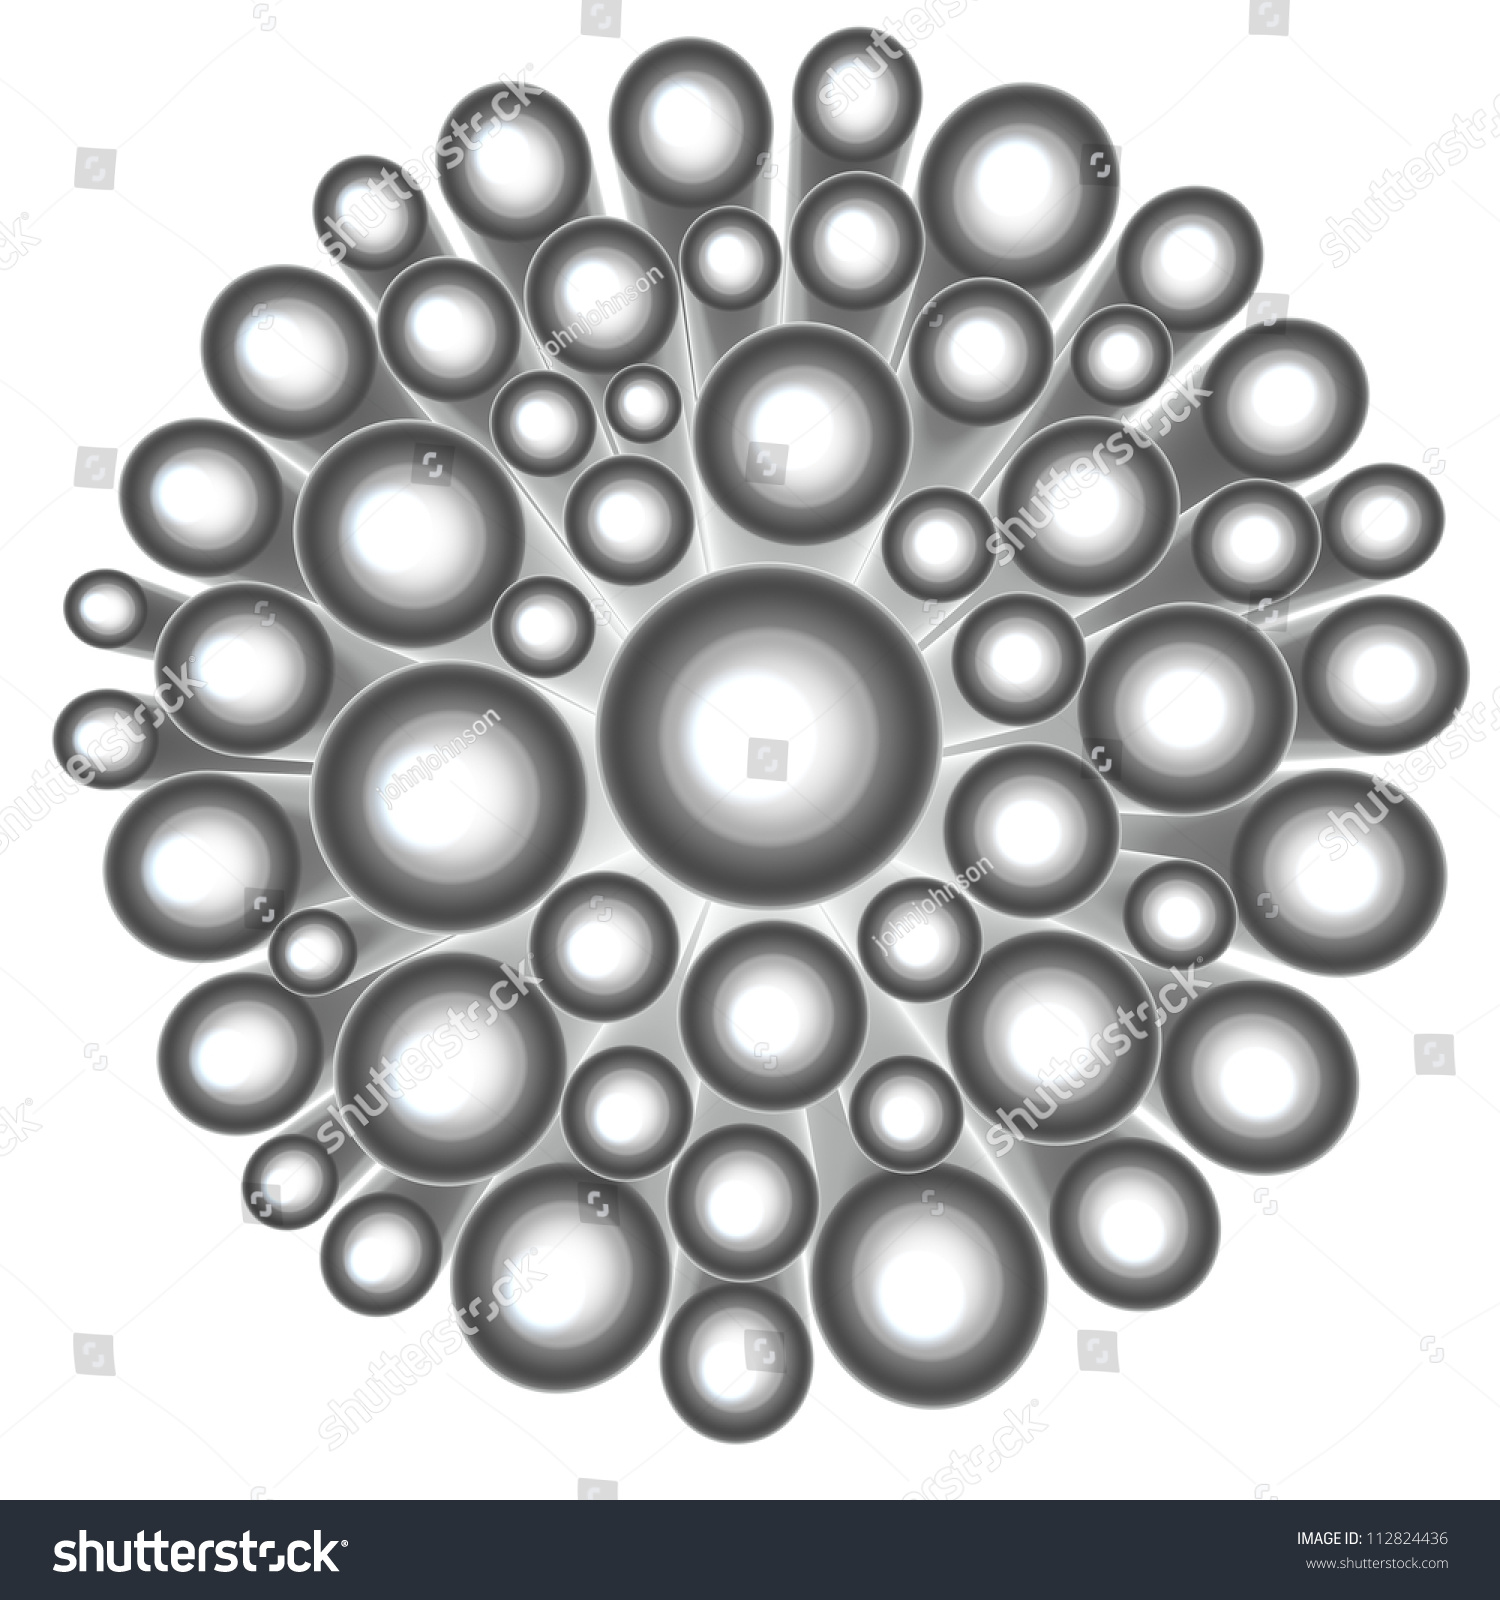 3d Render Abstract Silver Chrome Flower Stock Illustration 112824436 ...